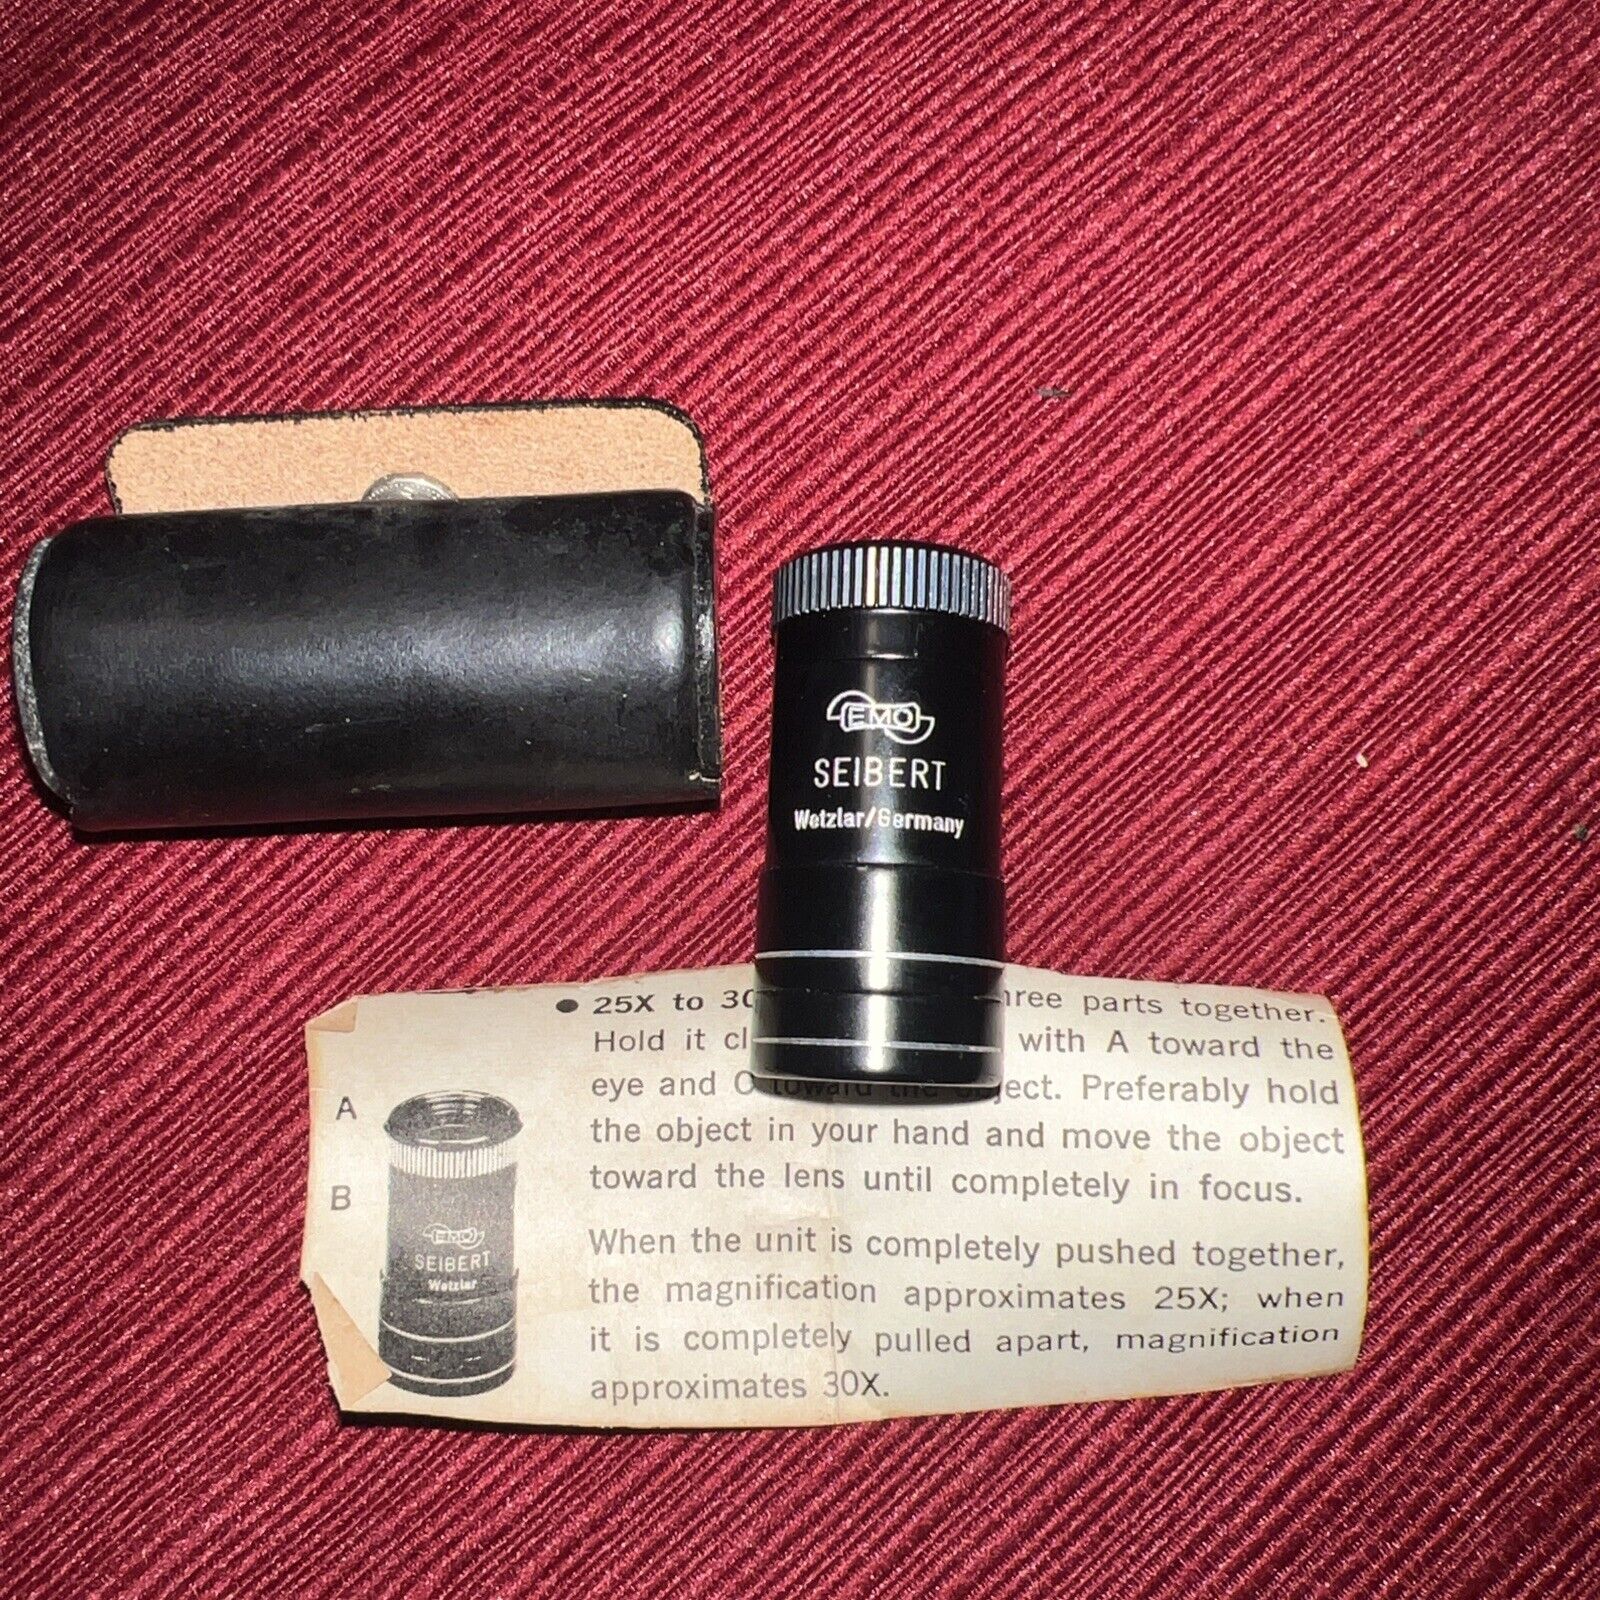 EMO Seibert Wetzlar Pocket Loupe Telescope Microscope W. Germany w/Leather Case